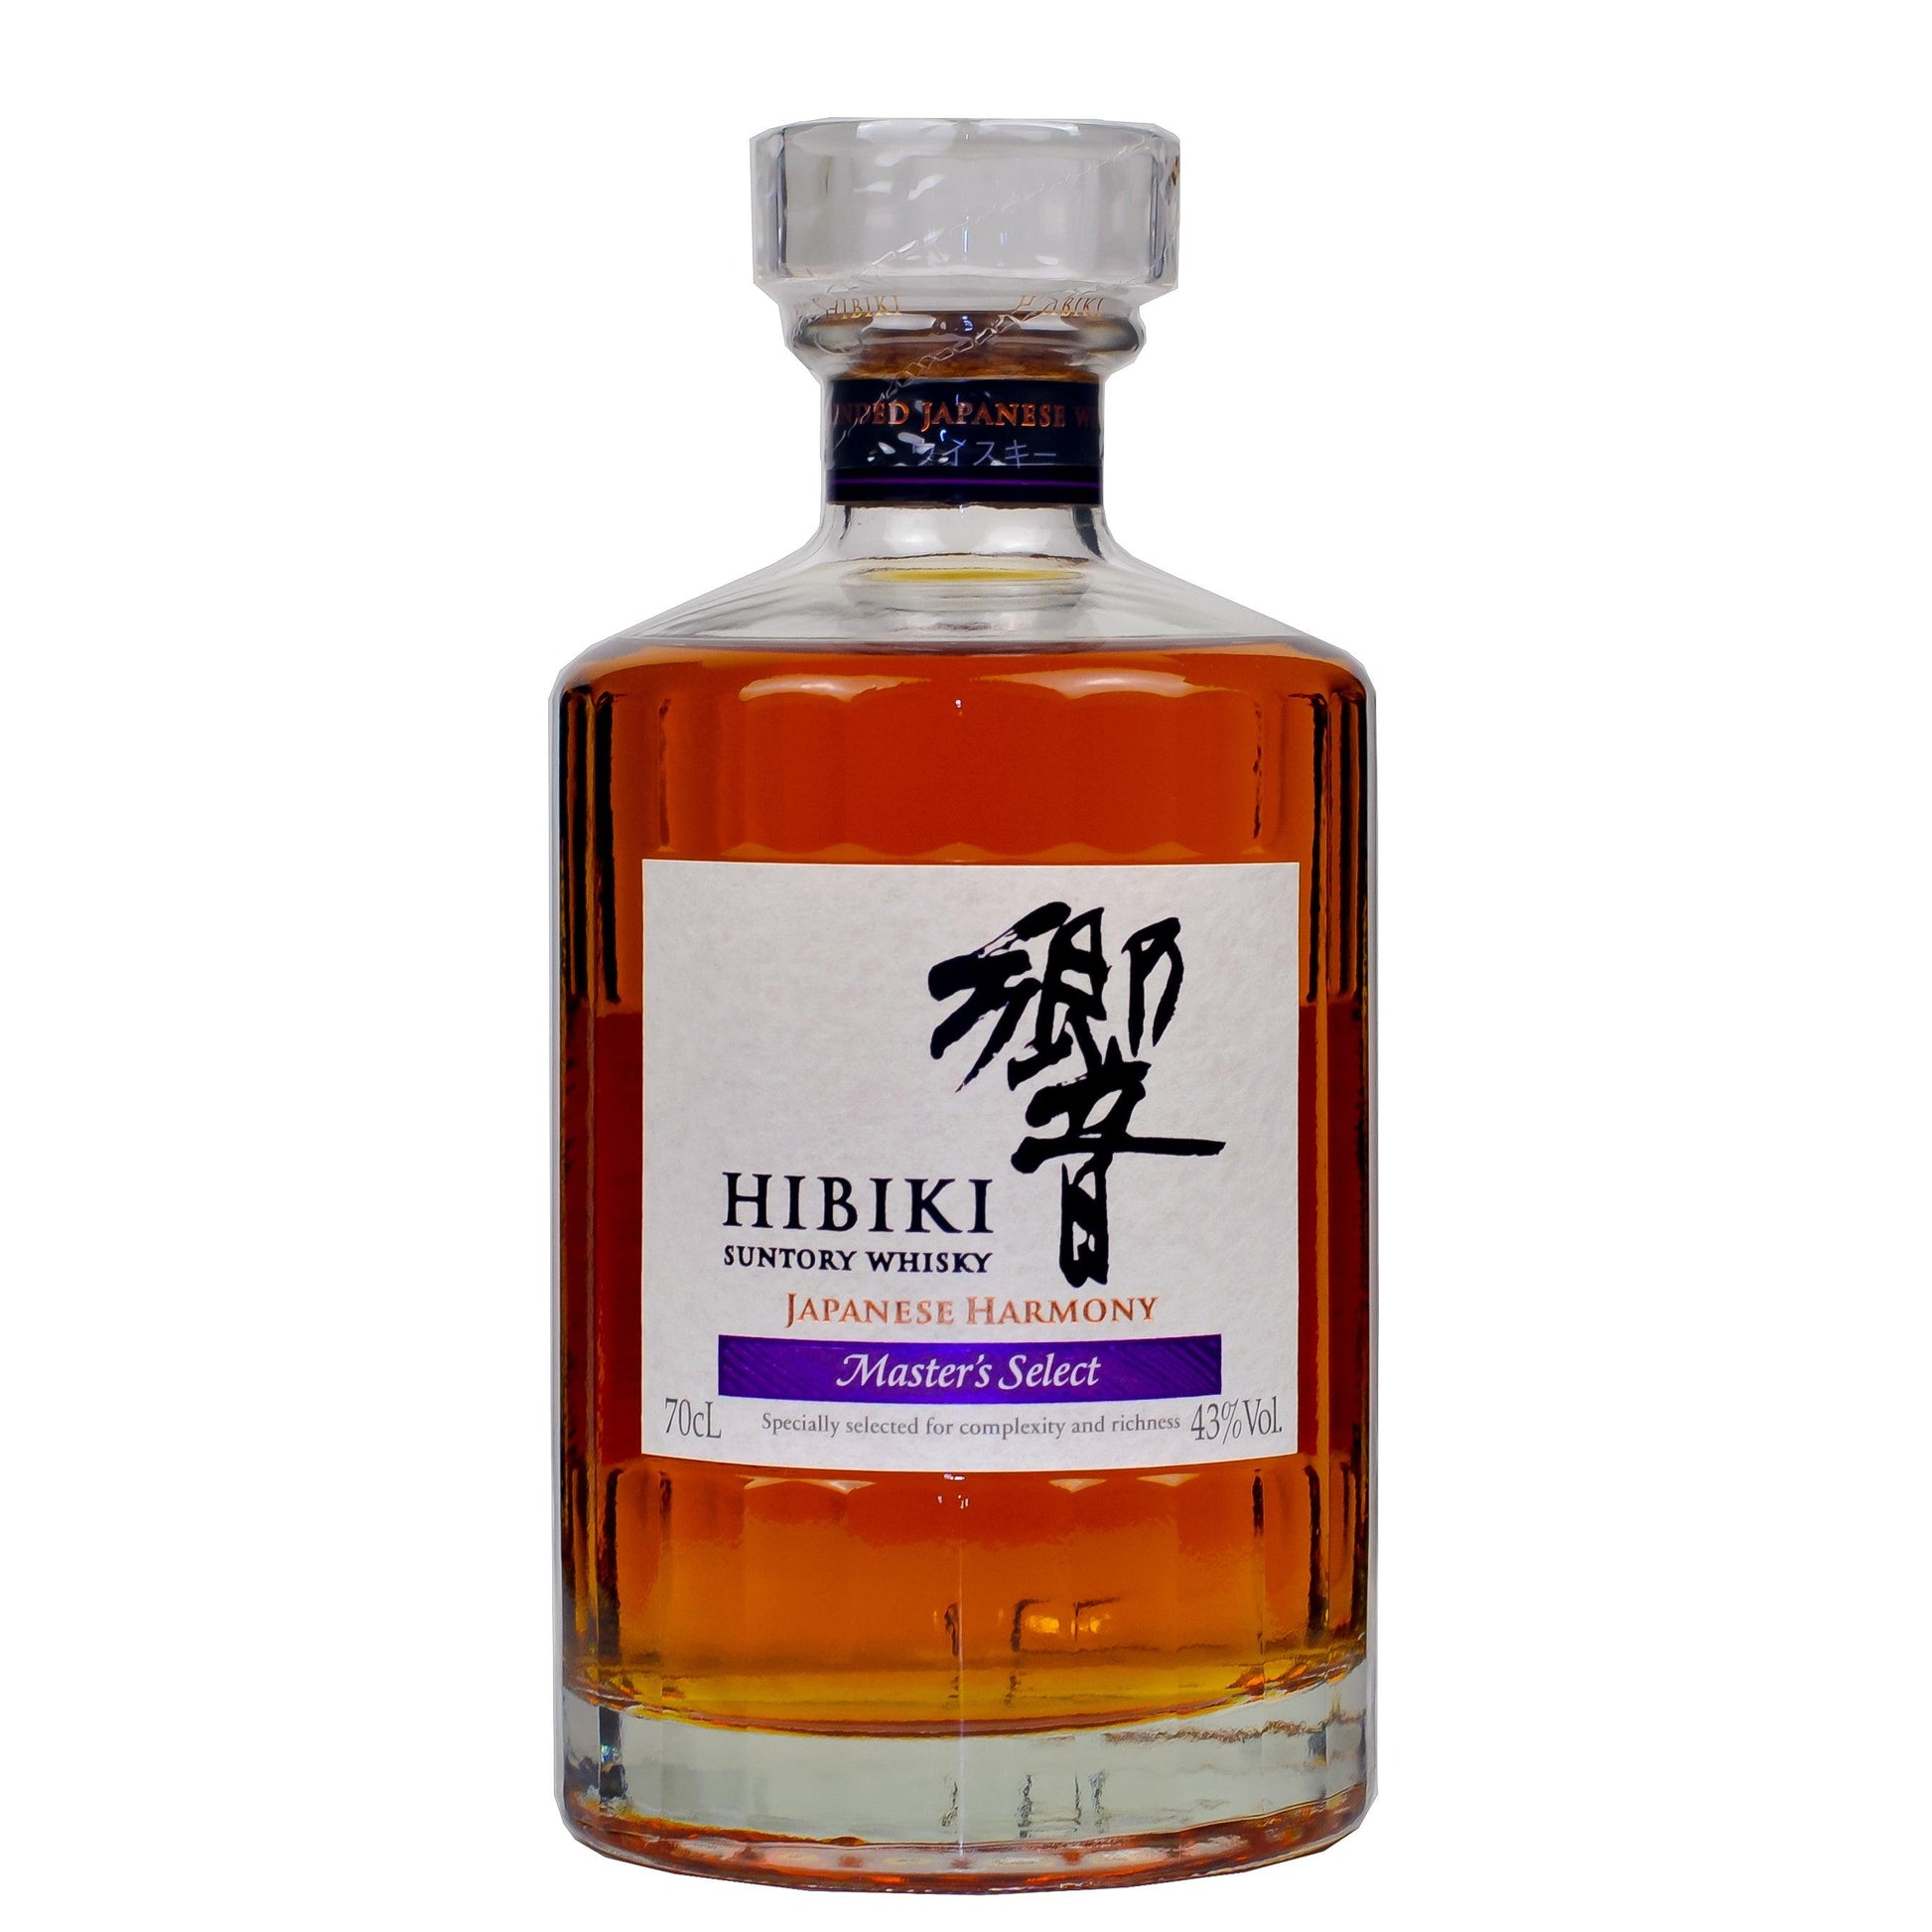 Hibiki Japanese Harmony Master's Select - Whisky Grail